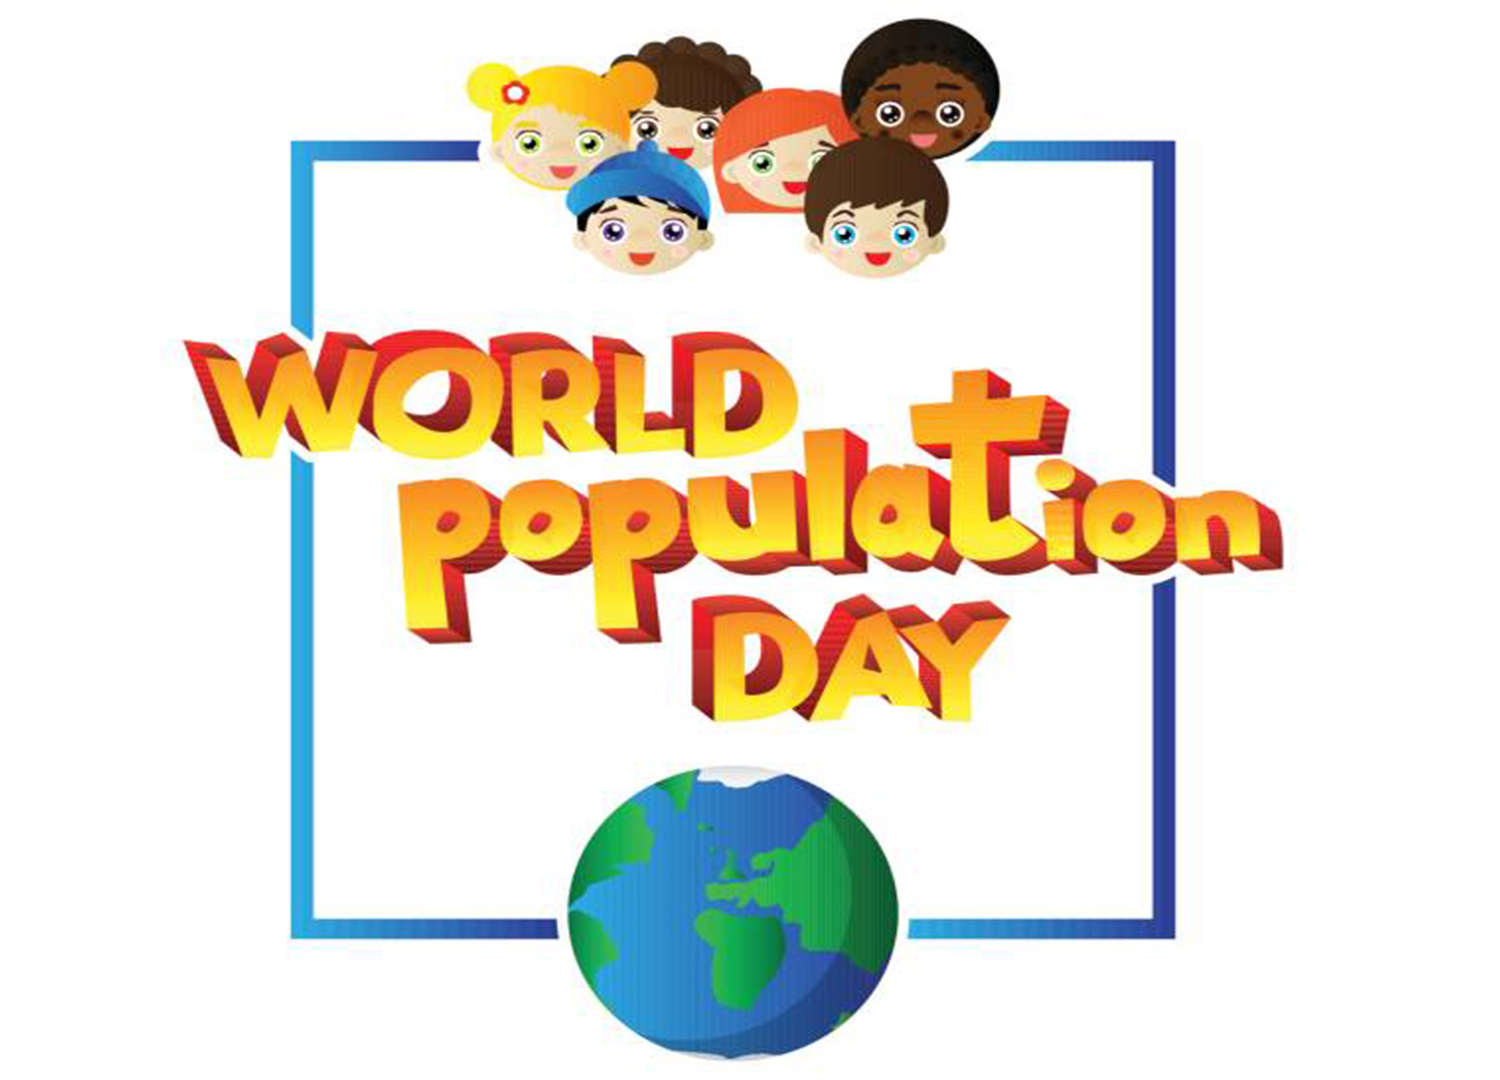 population day image 2018